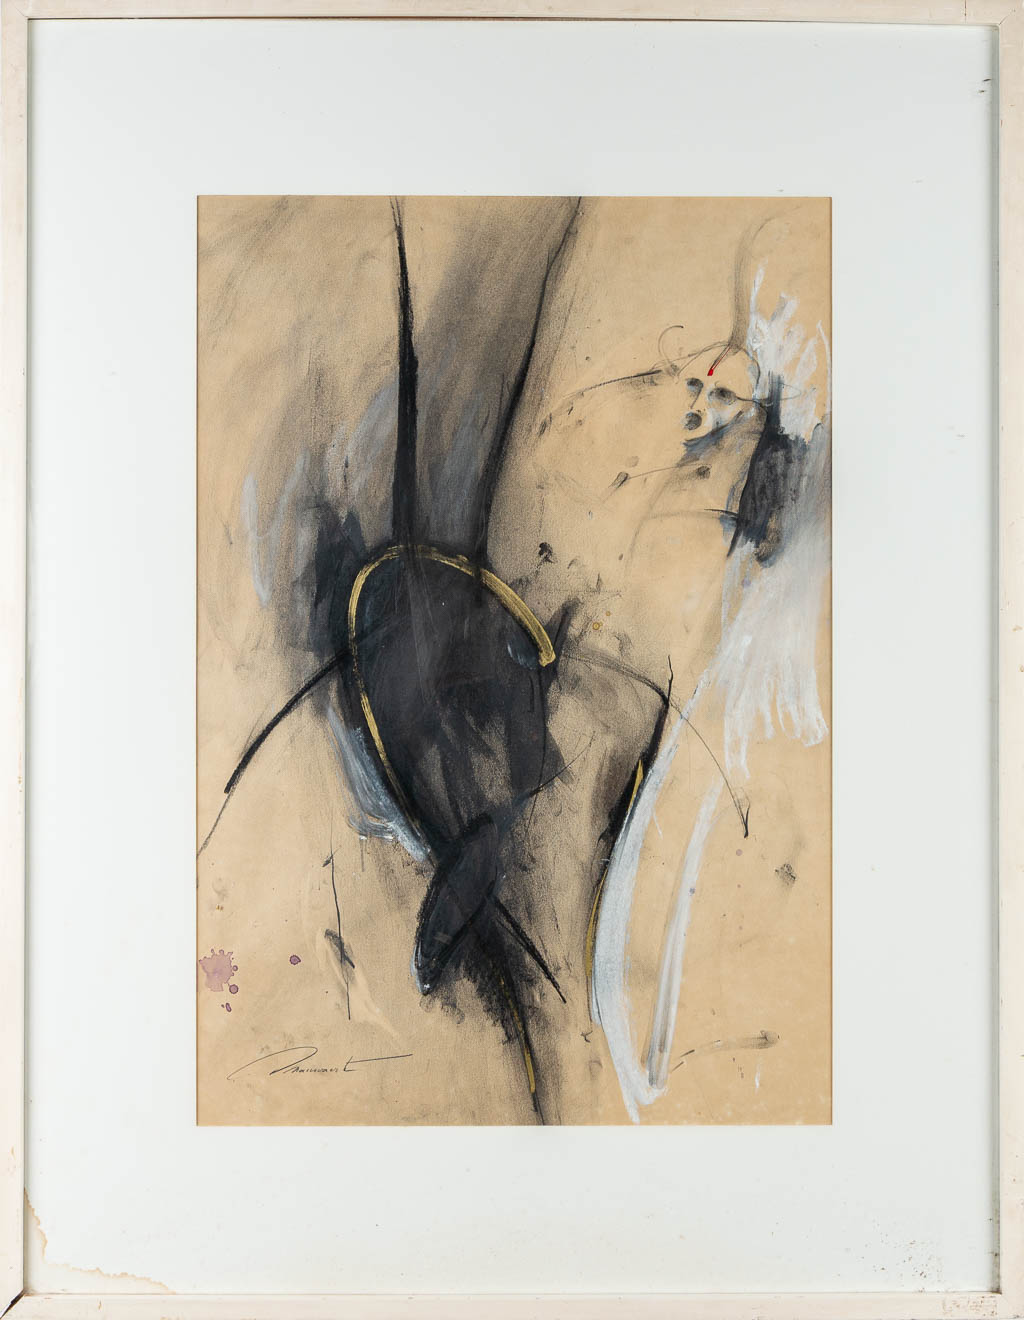 Jef SNAUWAERT (1949) 'L'enfer' a mixed media on paper. (47 x 69 cm)